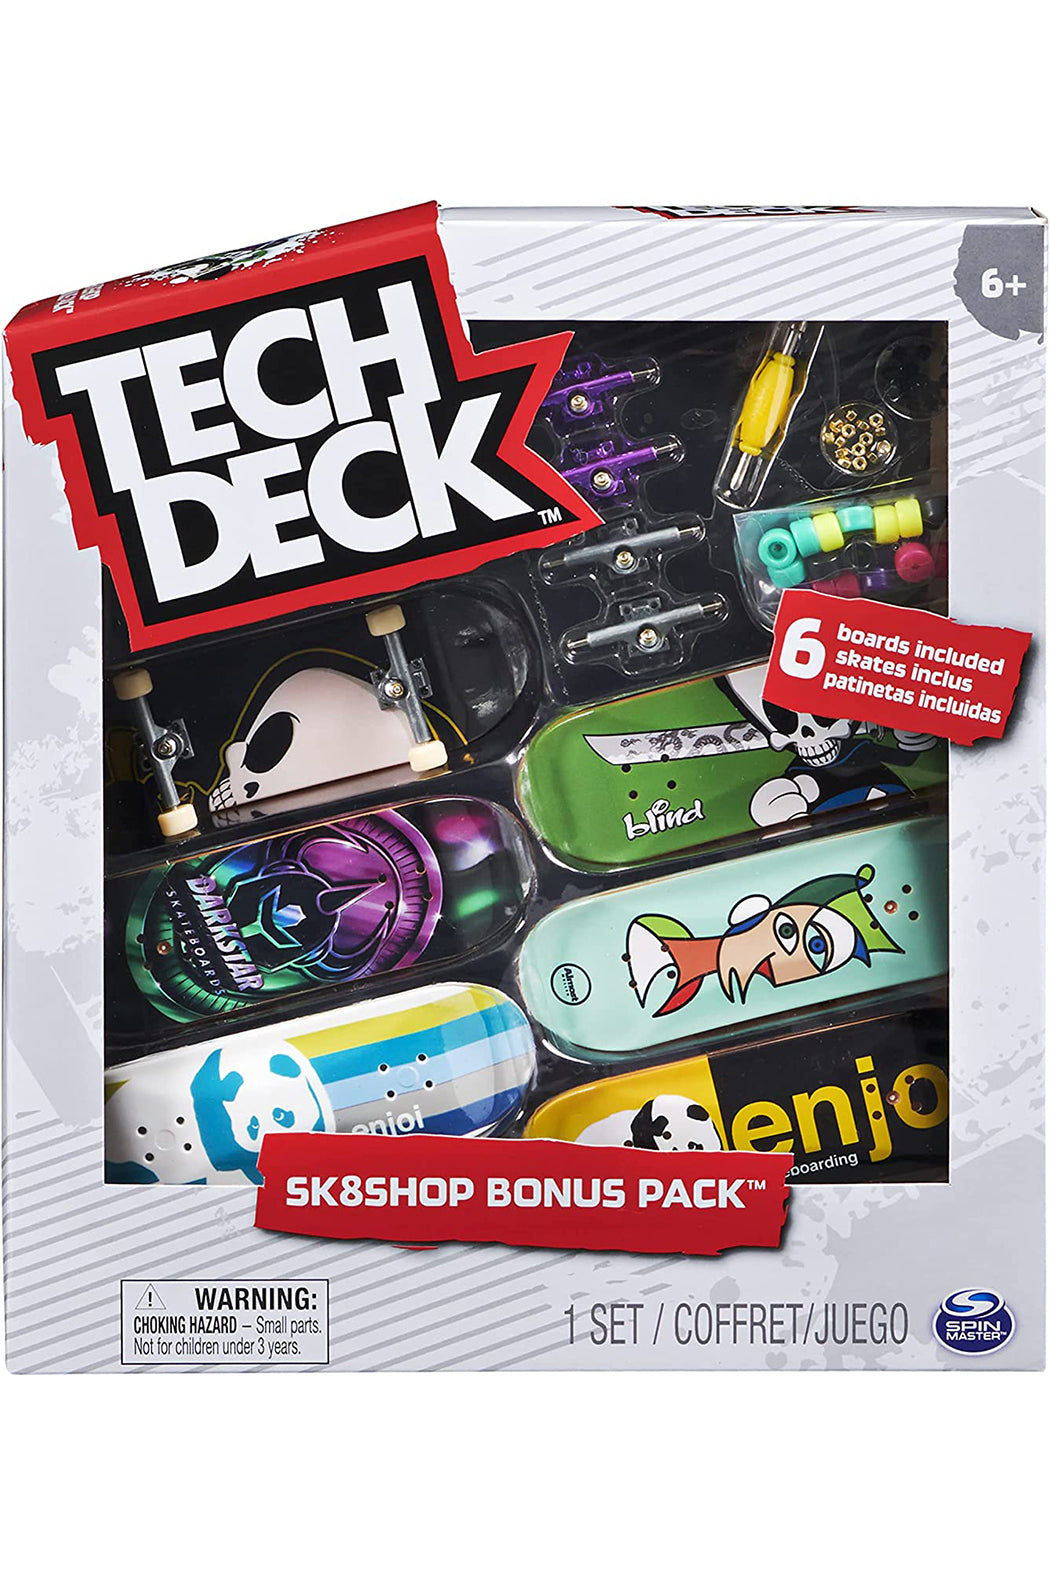 Tech Deck Sk8shop Fingerboard Bonus Pack